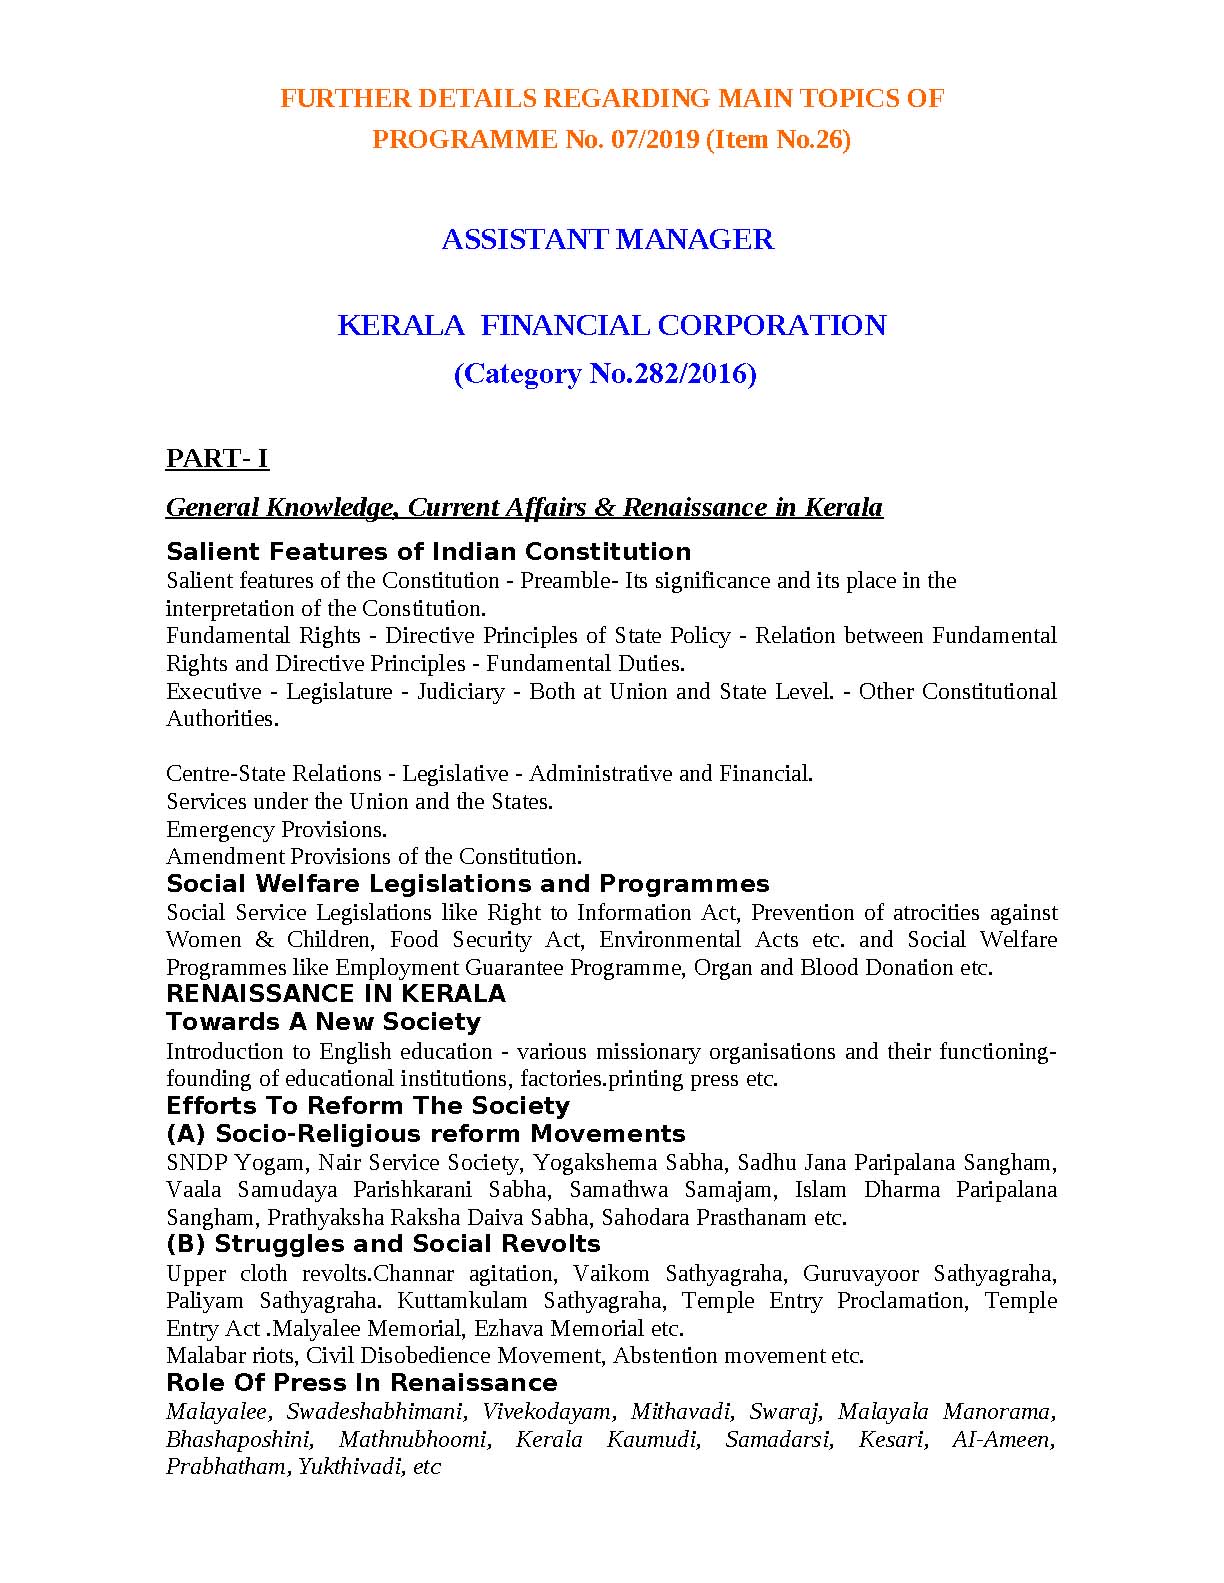 KPSC Exam Syllabus 2019 Assistant Manager - Notification Image 1